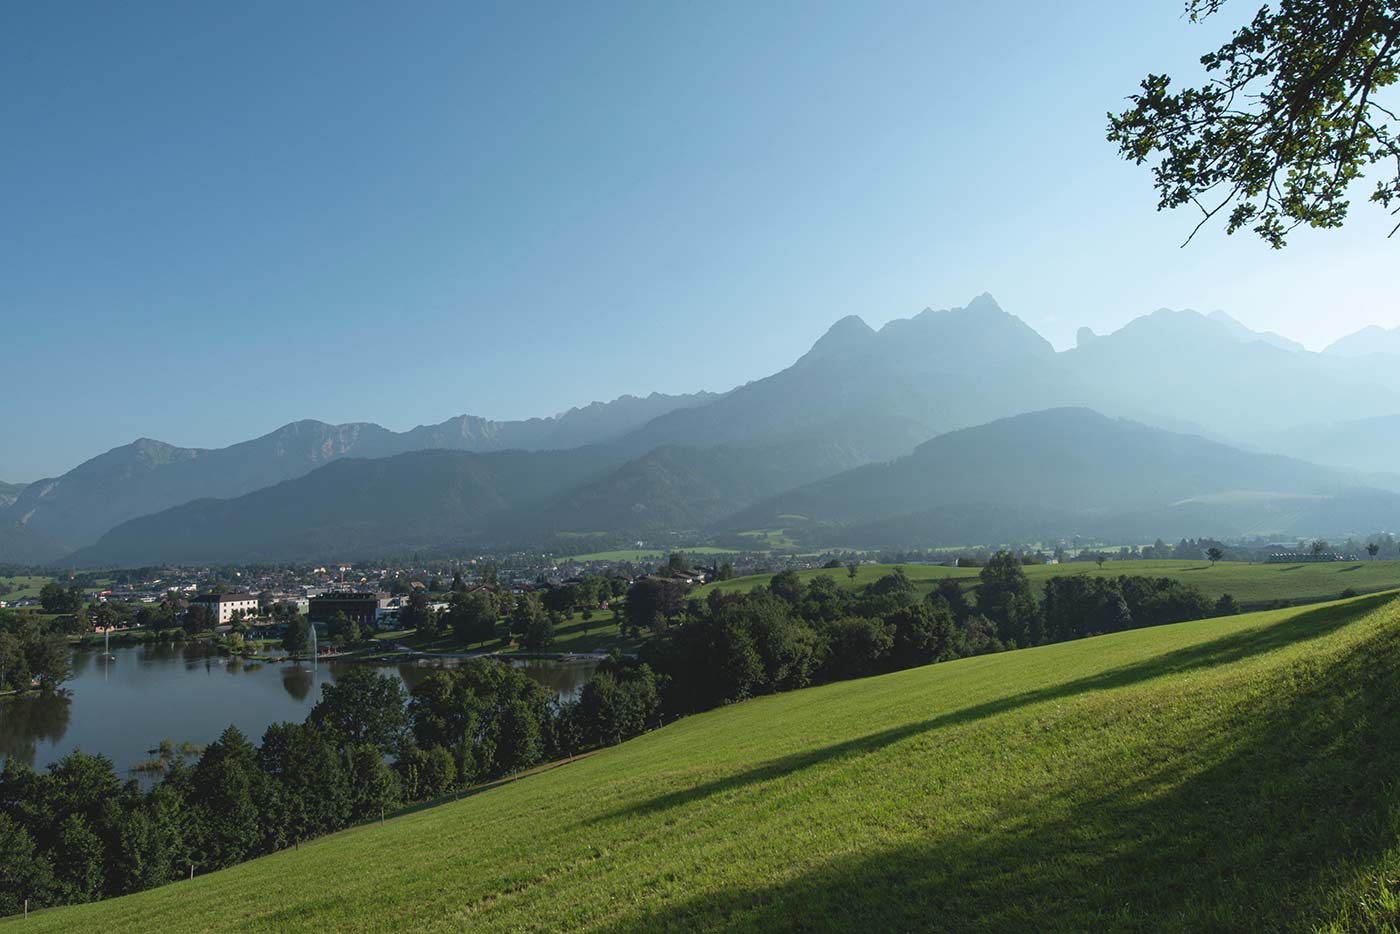 The lovely region of Saalfelden Leogang in the Austrian Alps